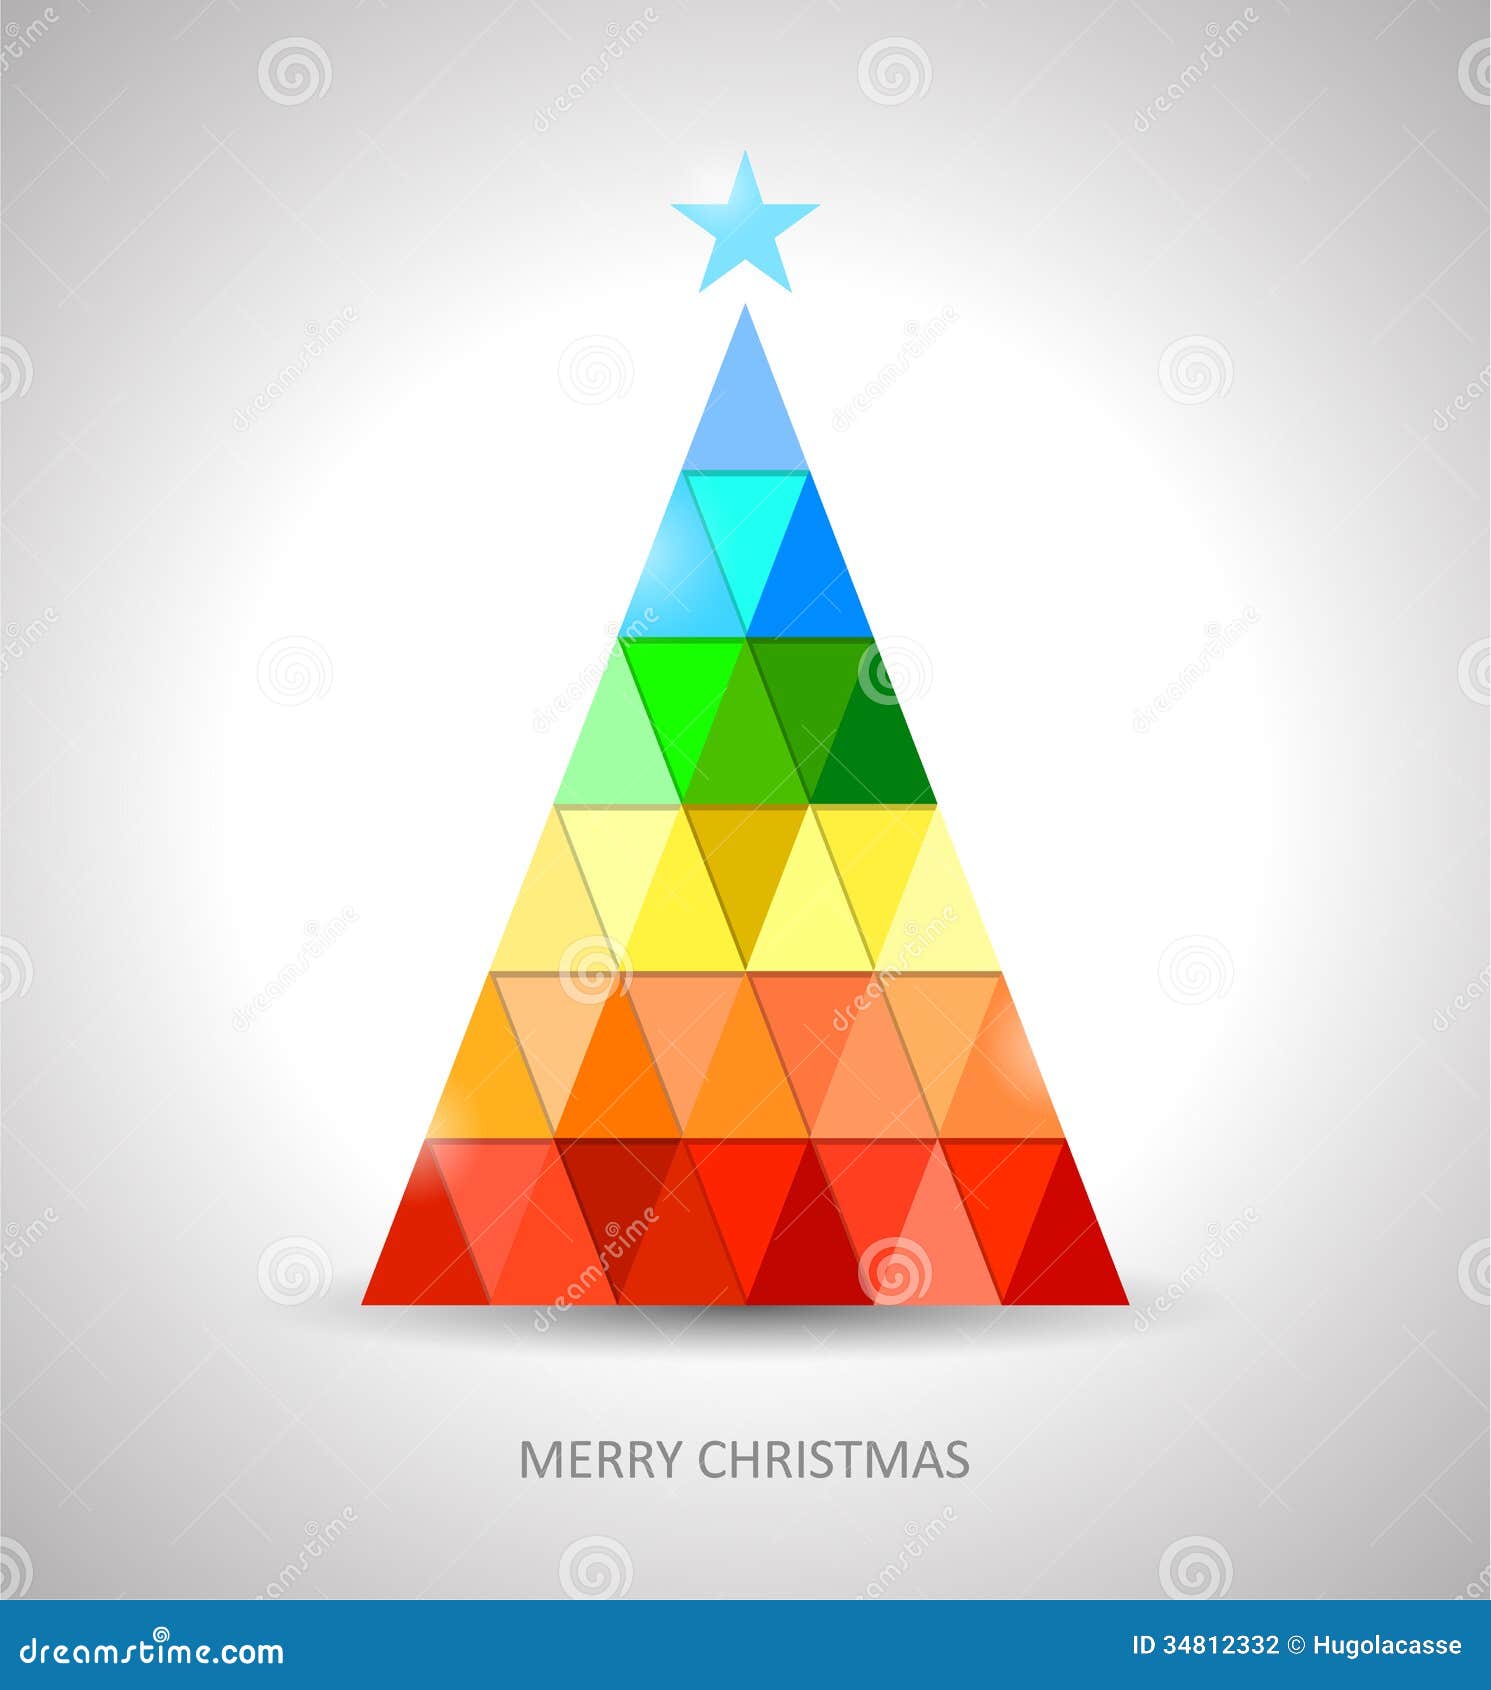 Download Original Christmas Tree Design In Rainbow Colors Stock ...